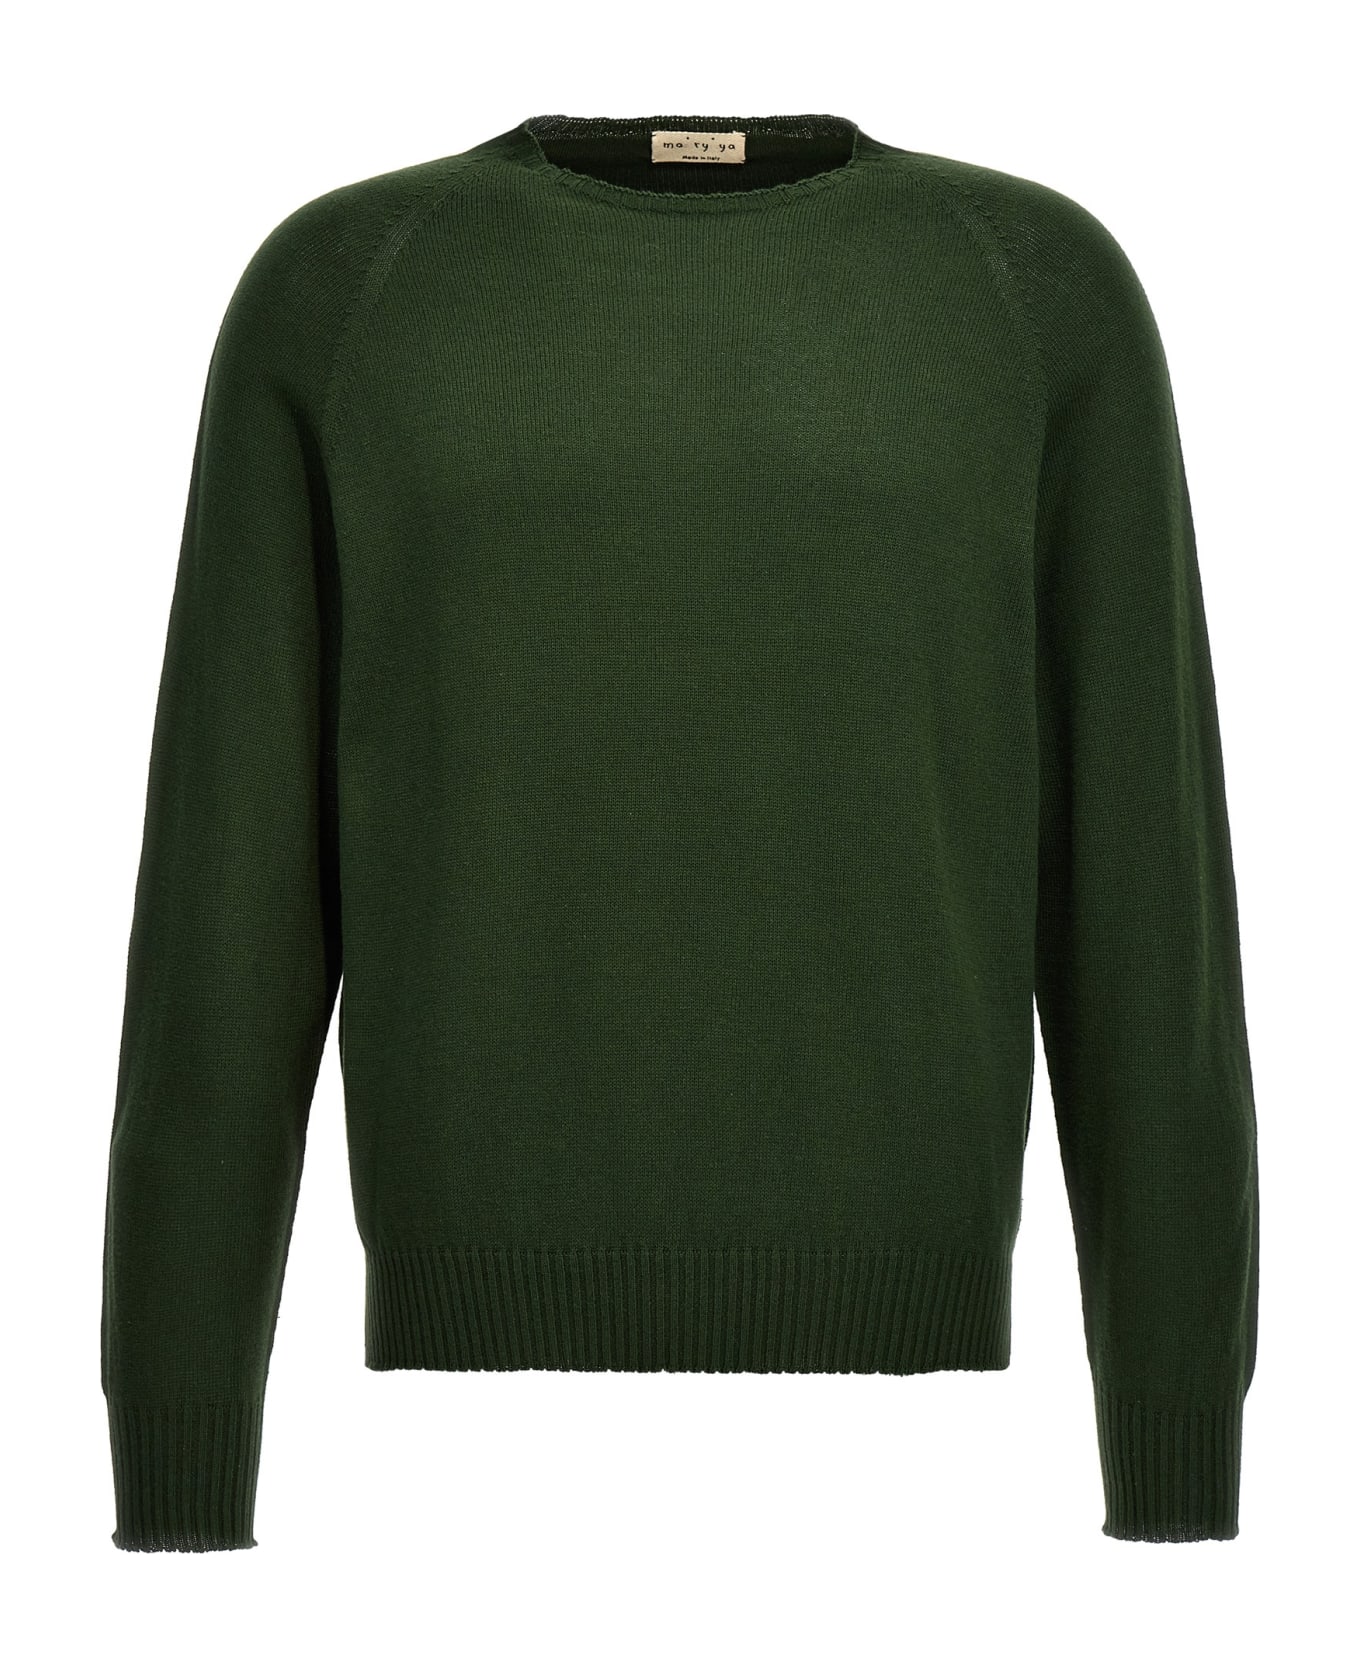 Ma'ry'ya Crew-neck Sweater - Green ニットウェア